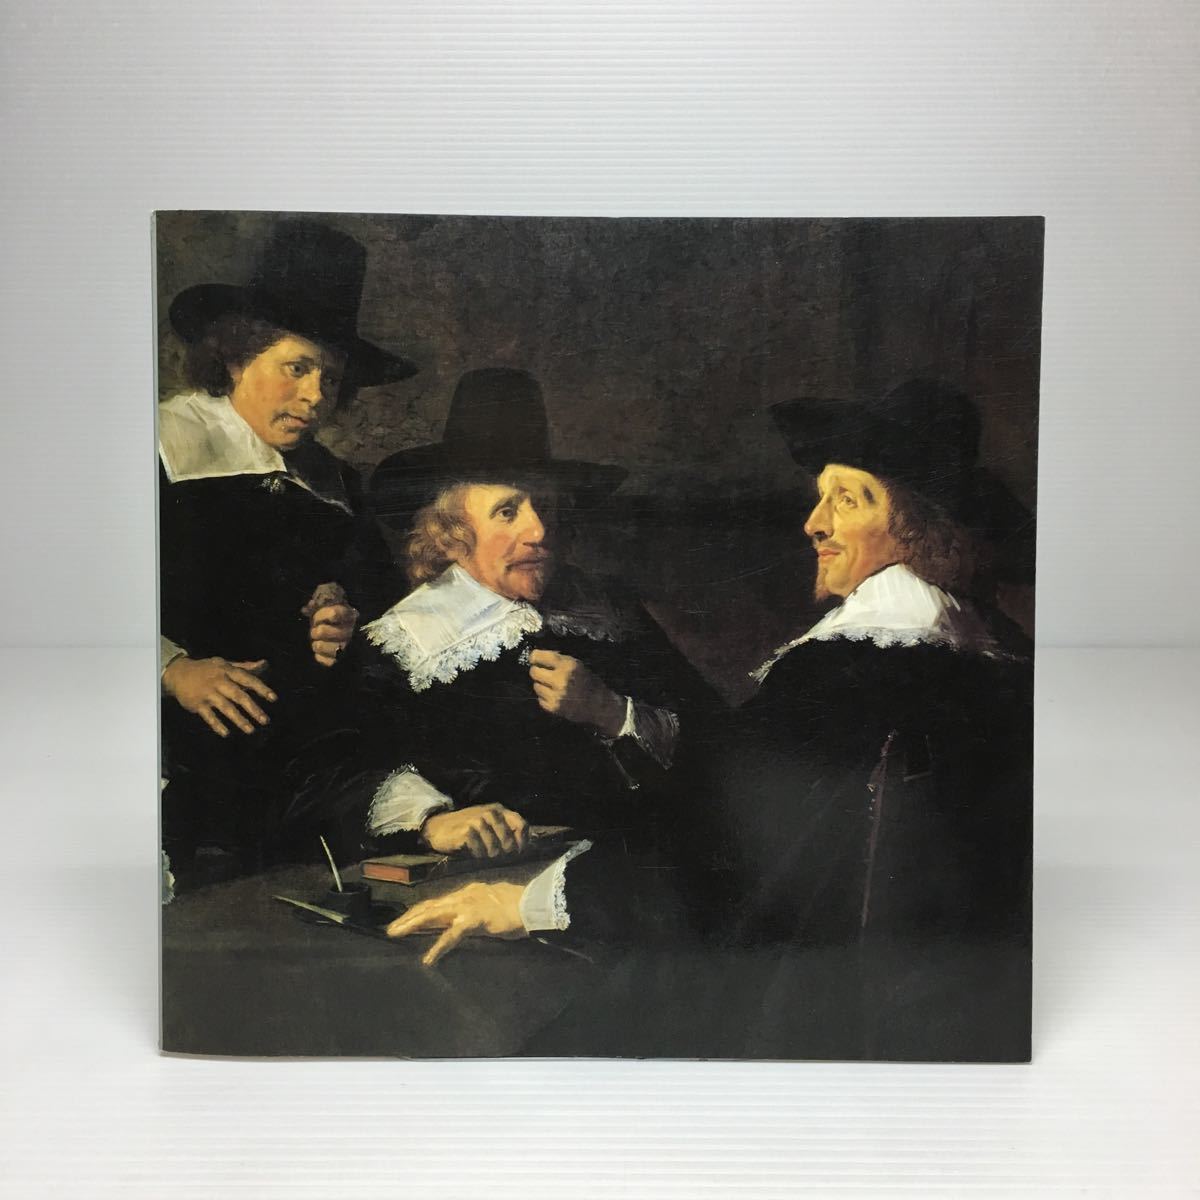 m2/فرانس هالس والنسبة الذهبية في الرسم الهولندي في القرن السابع عشر فرانس هالس وهارلم بينترز 1988, تلوين, كتاب فن, مجموعة, فهرس